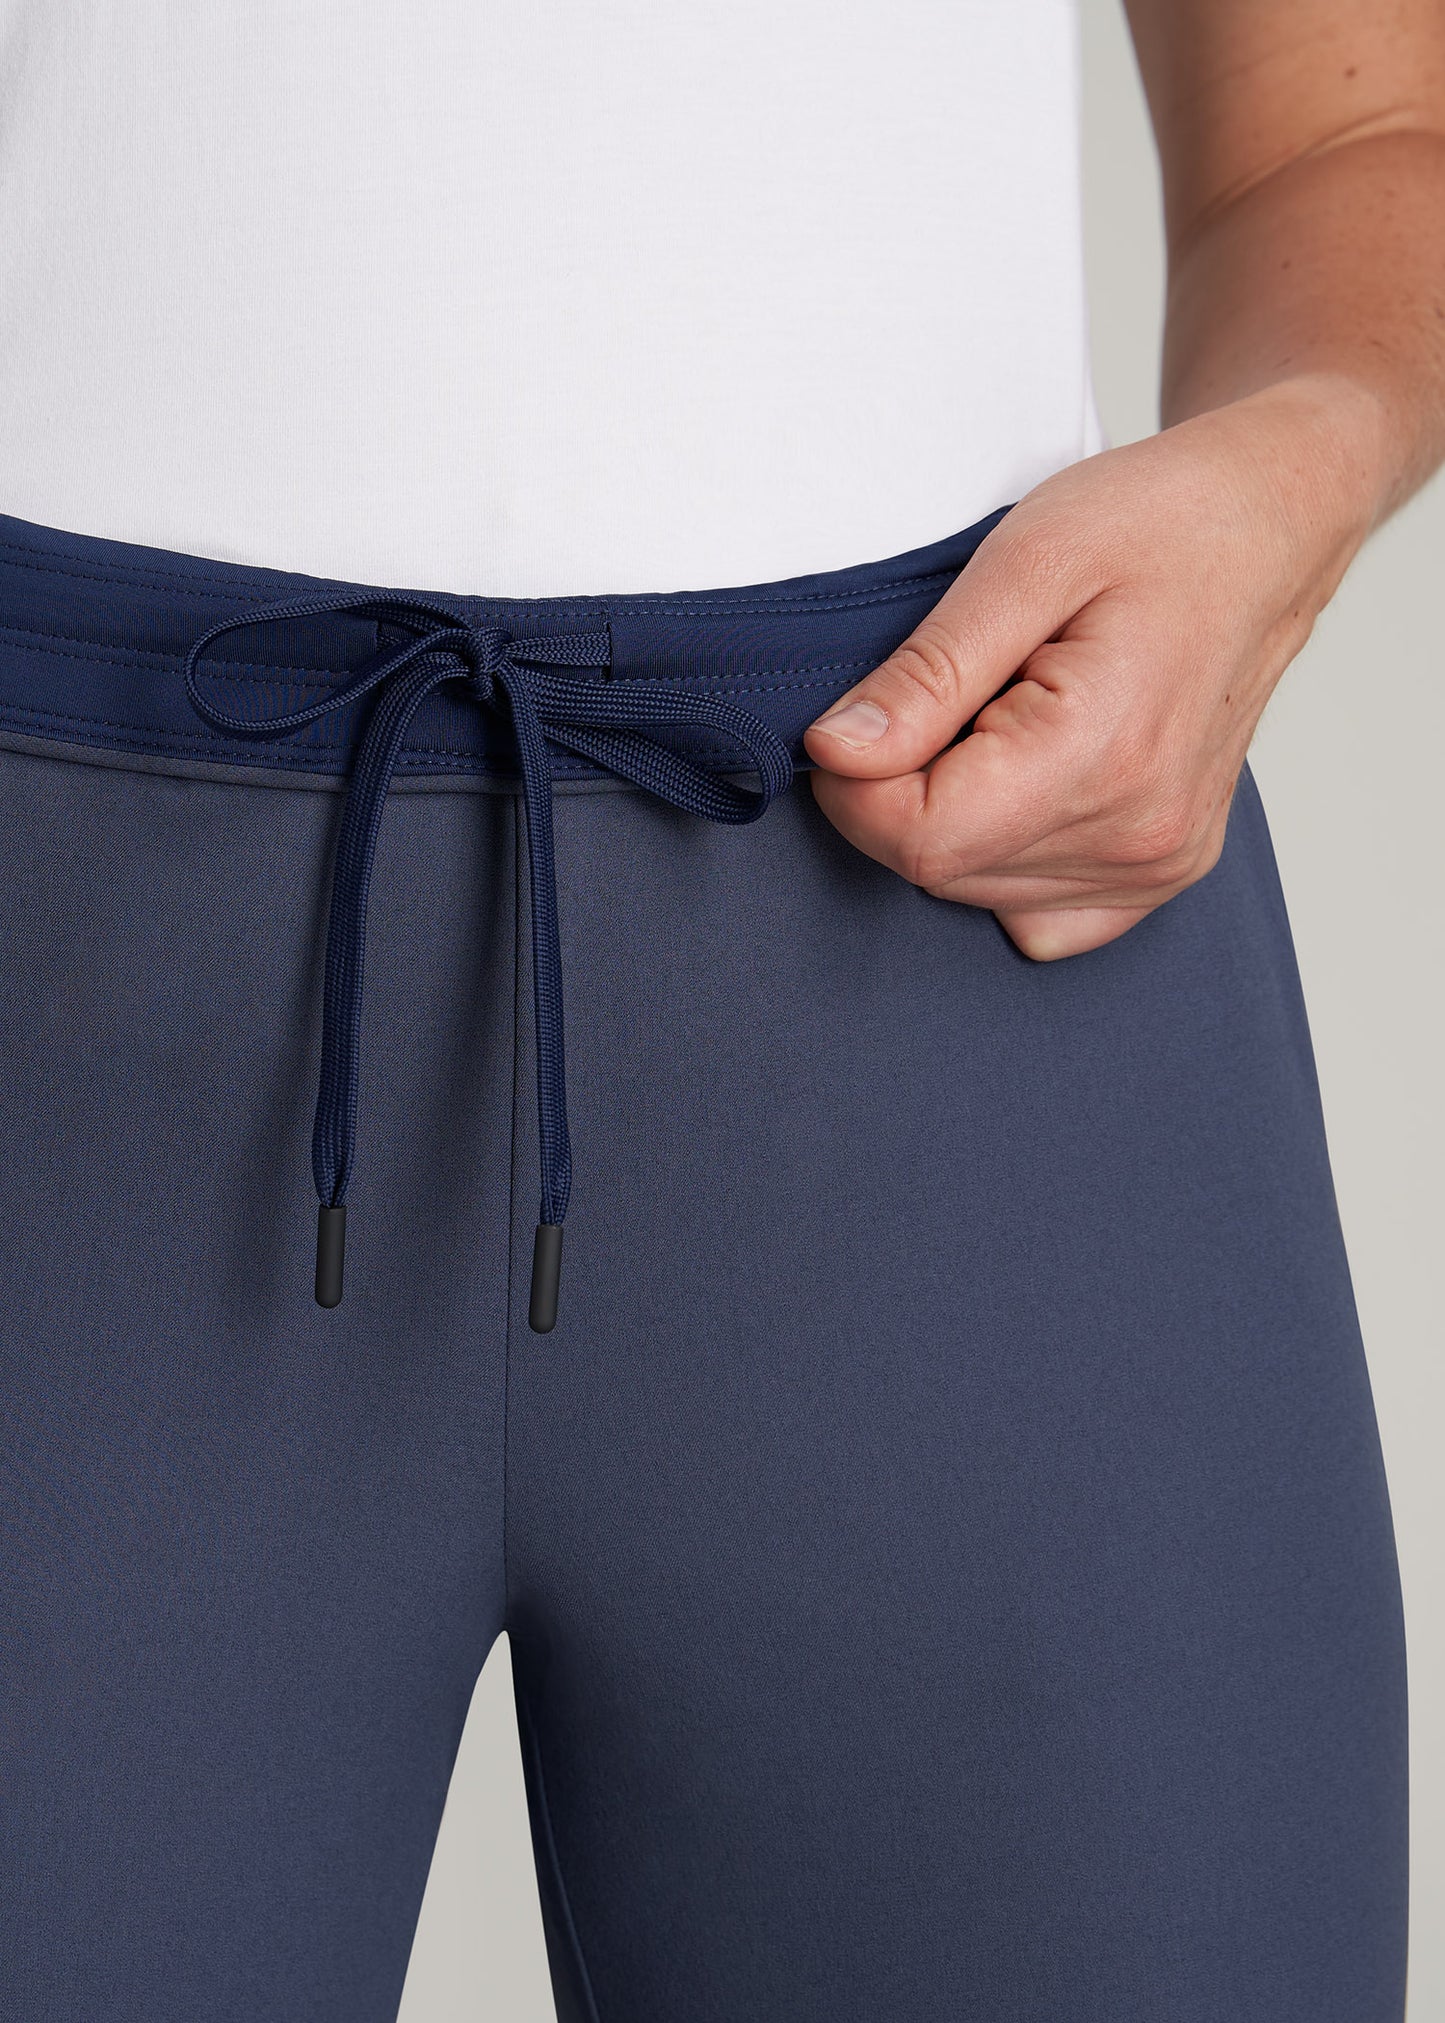 Pull-On Traveler Pants For Tall Women Smoky Blue